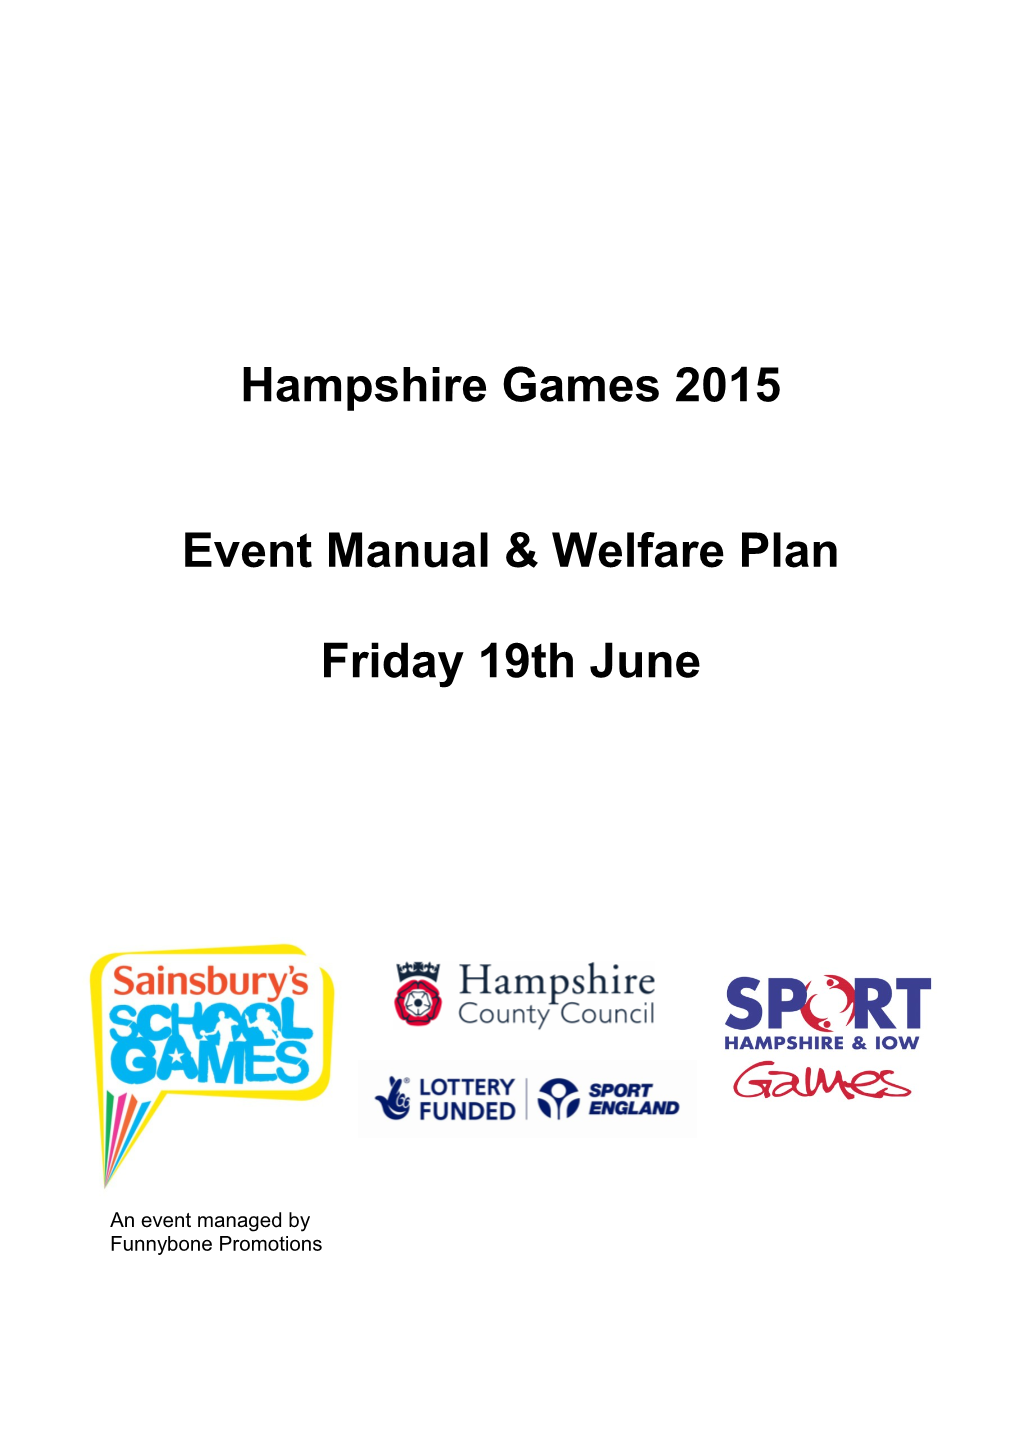 Event Manual & Welfare Plan